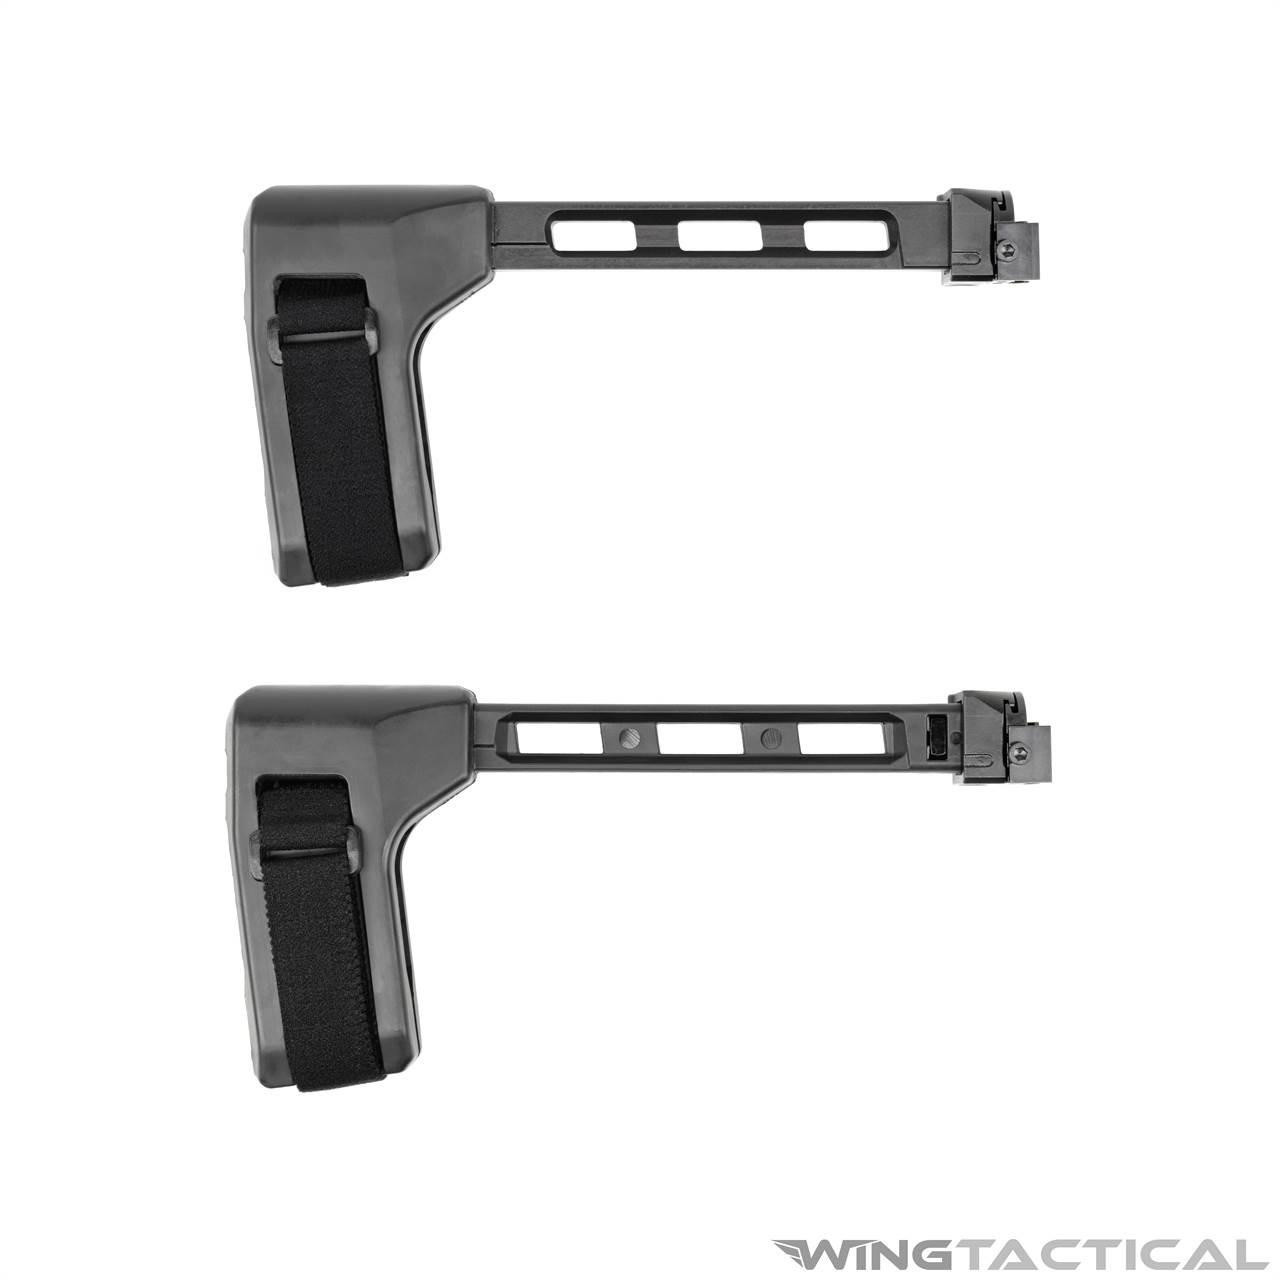  SB Tactical FS1913 Folding Pistol Pistol Brace 